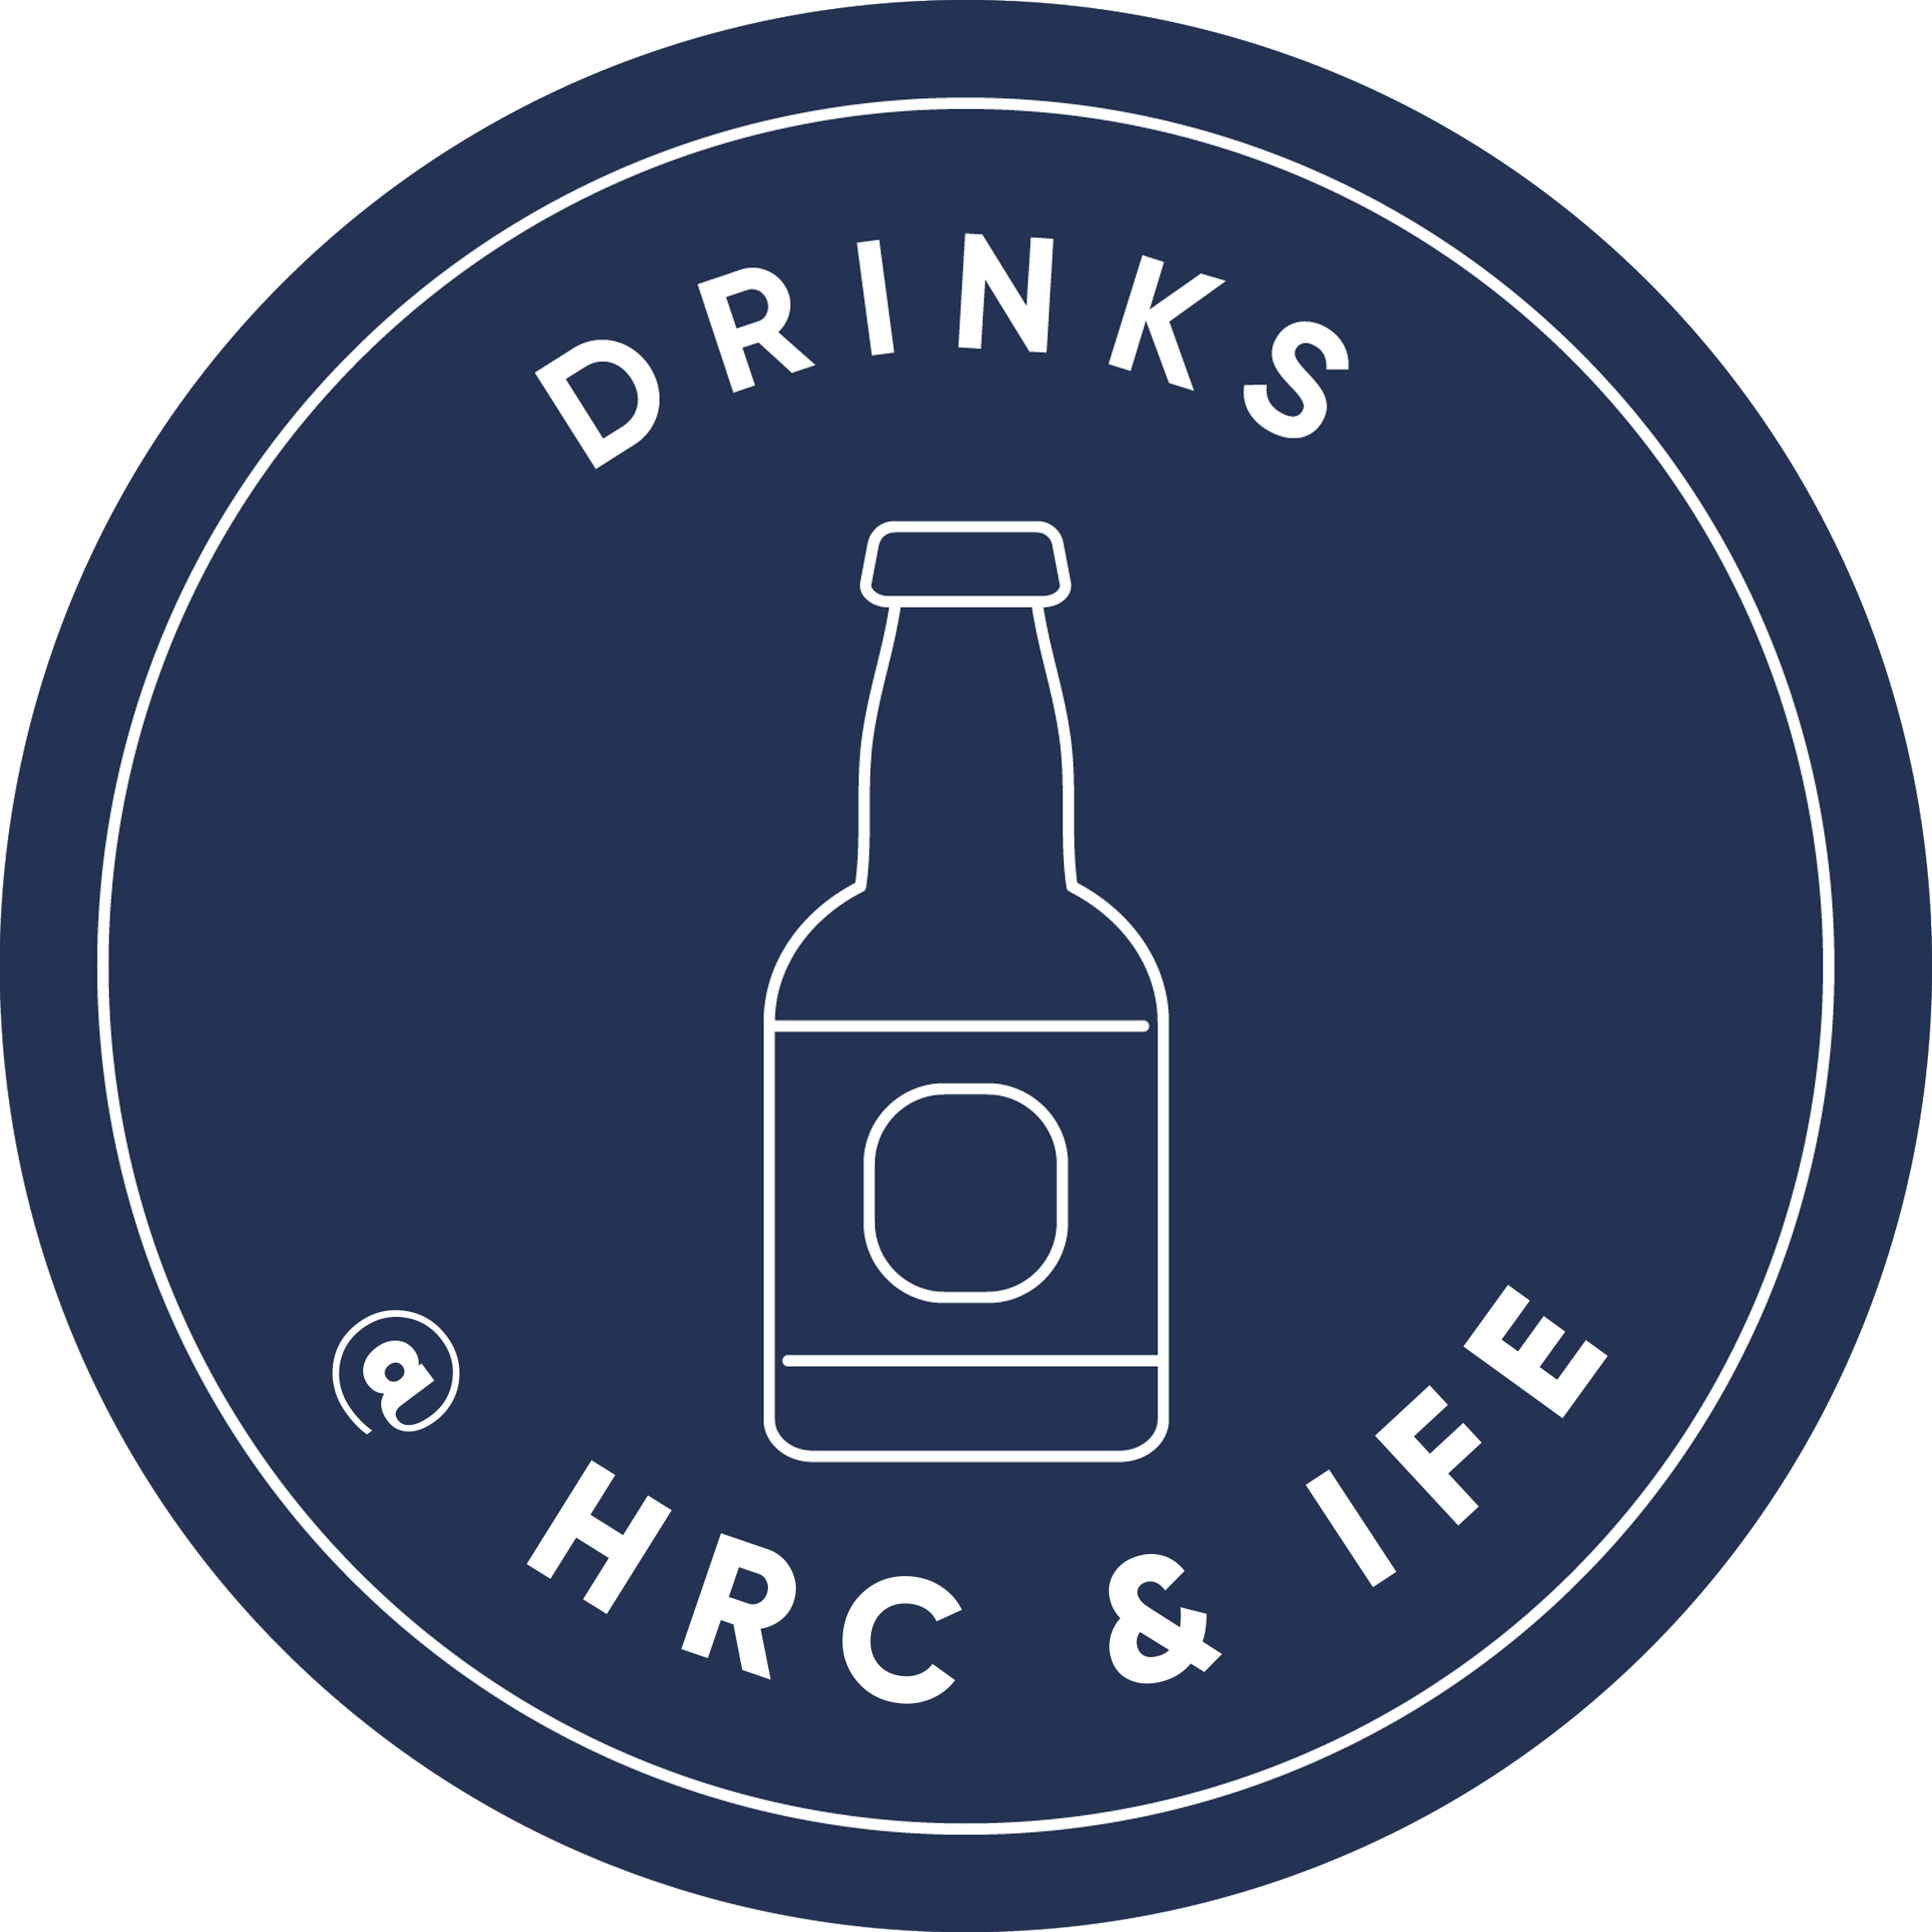 Drinks @ HRC & IFE